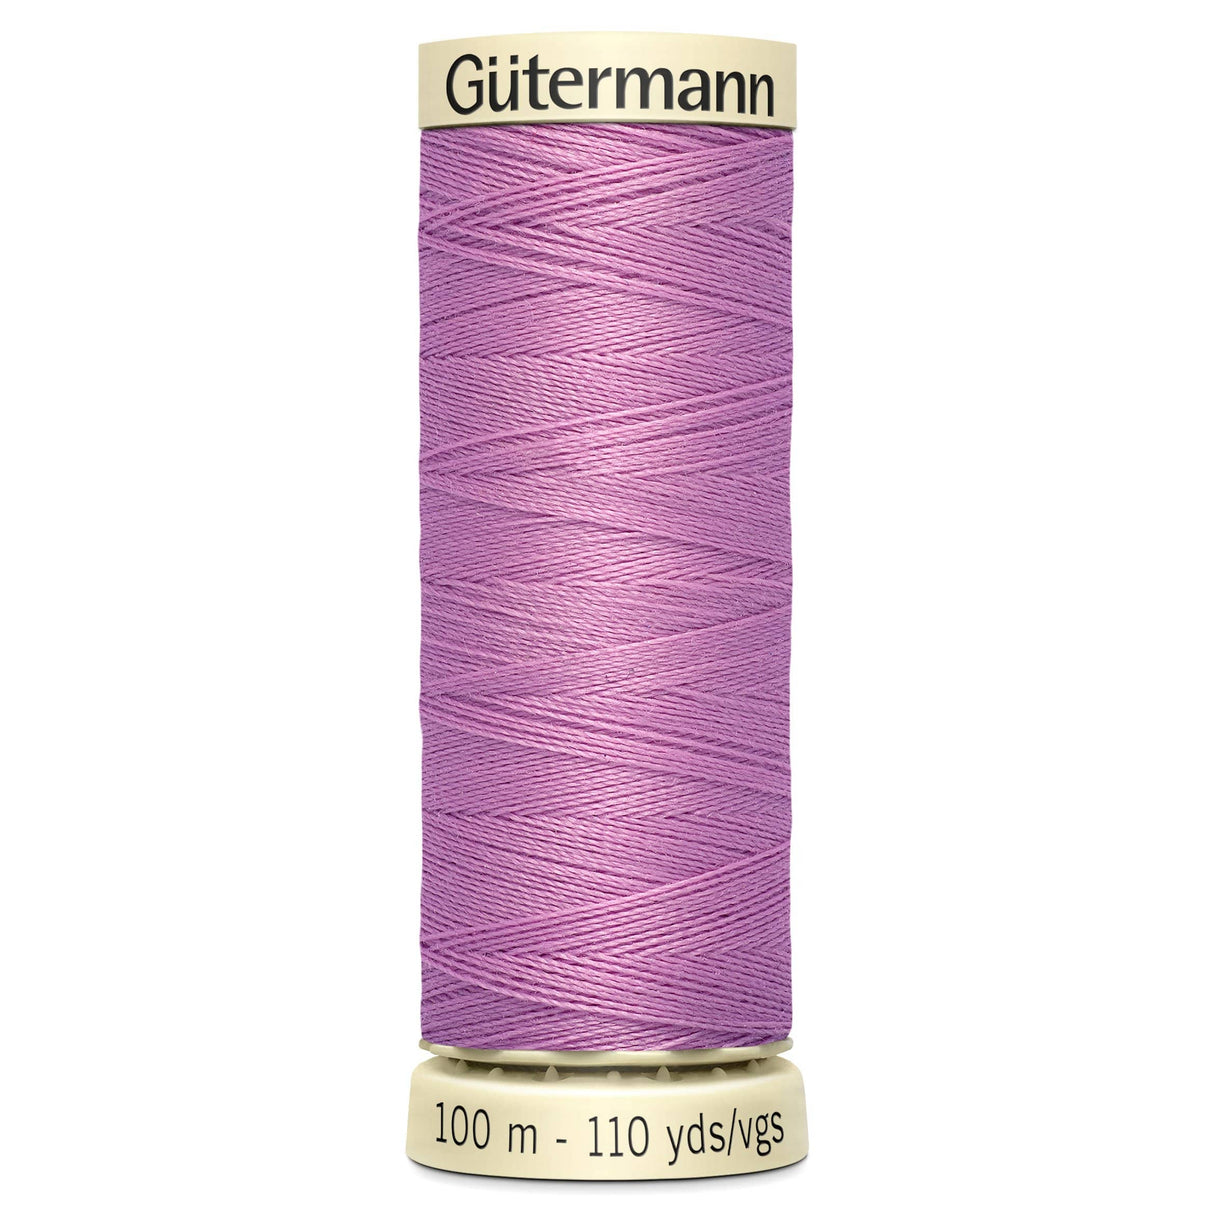 Groves Haberdashery 211 Gutermann Thread Sewing Cotton 100 m Black to Pink